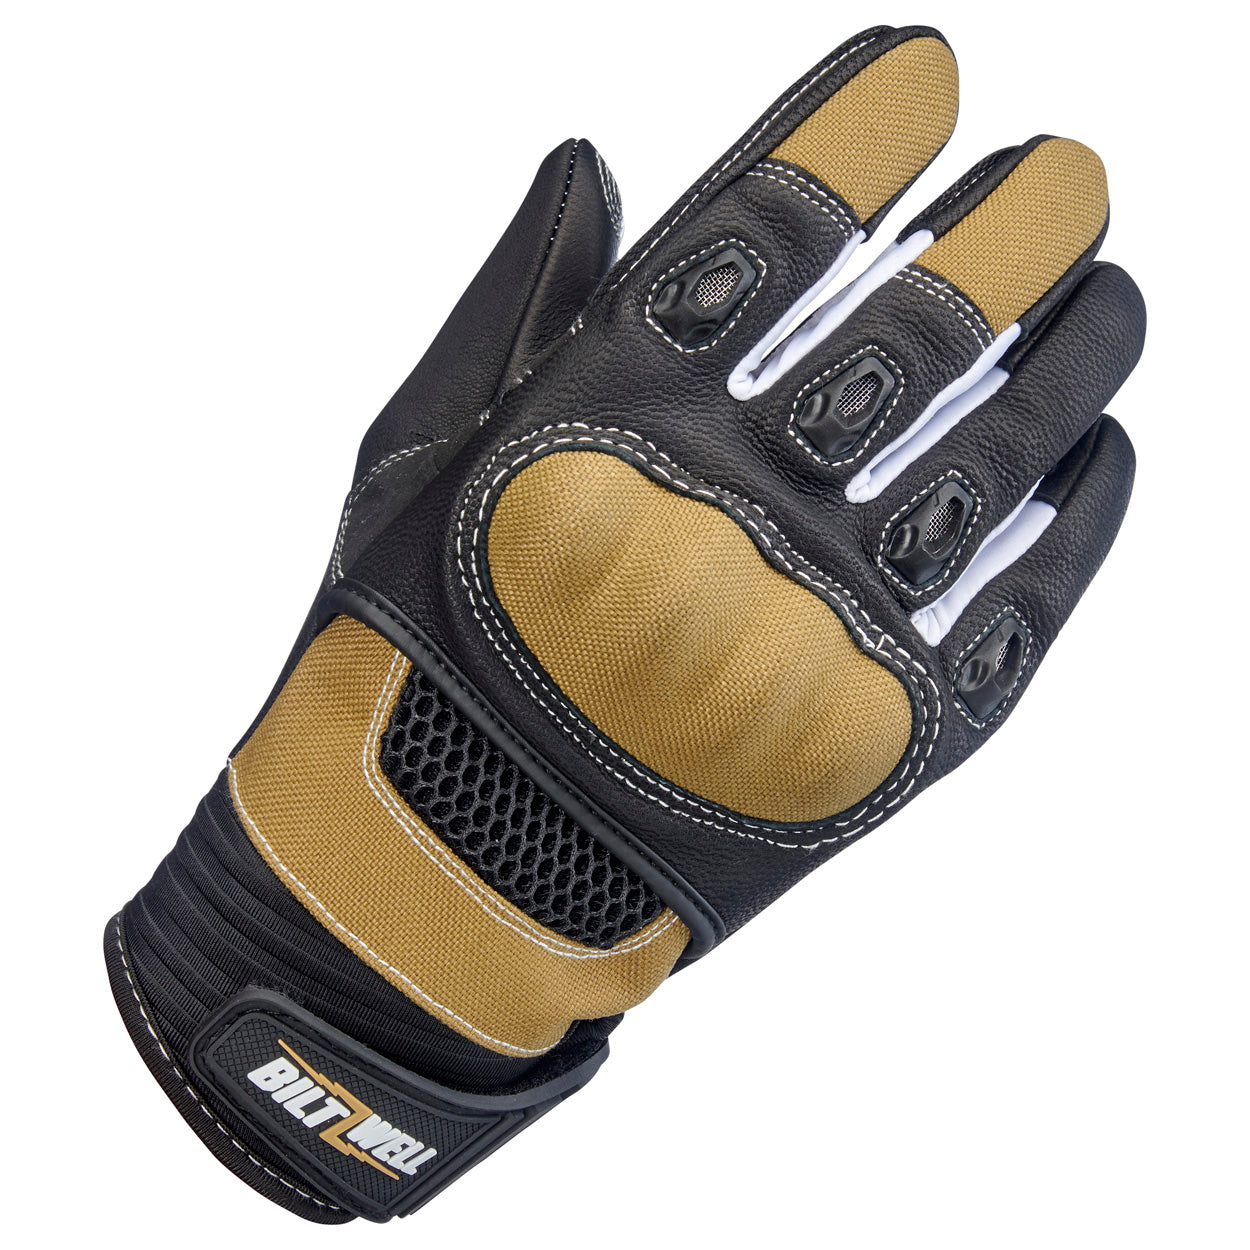 Biltwell Leather Work Gloves | 25% ($12.49) Off! - RevZilla